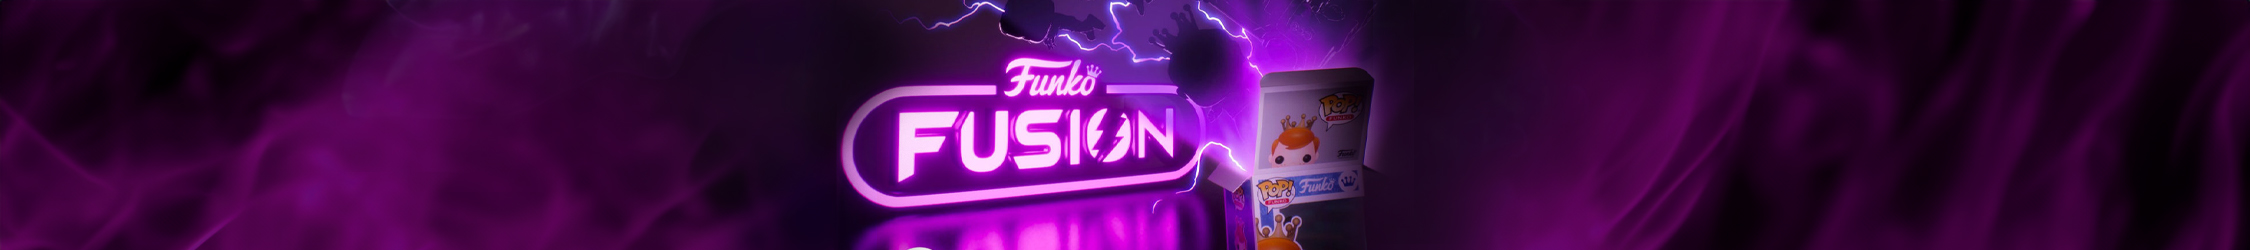 FunkoFusionLandingPage